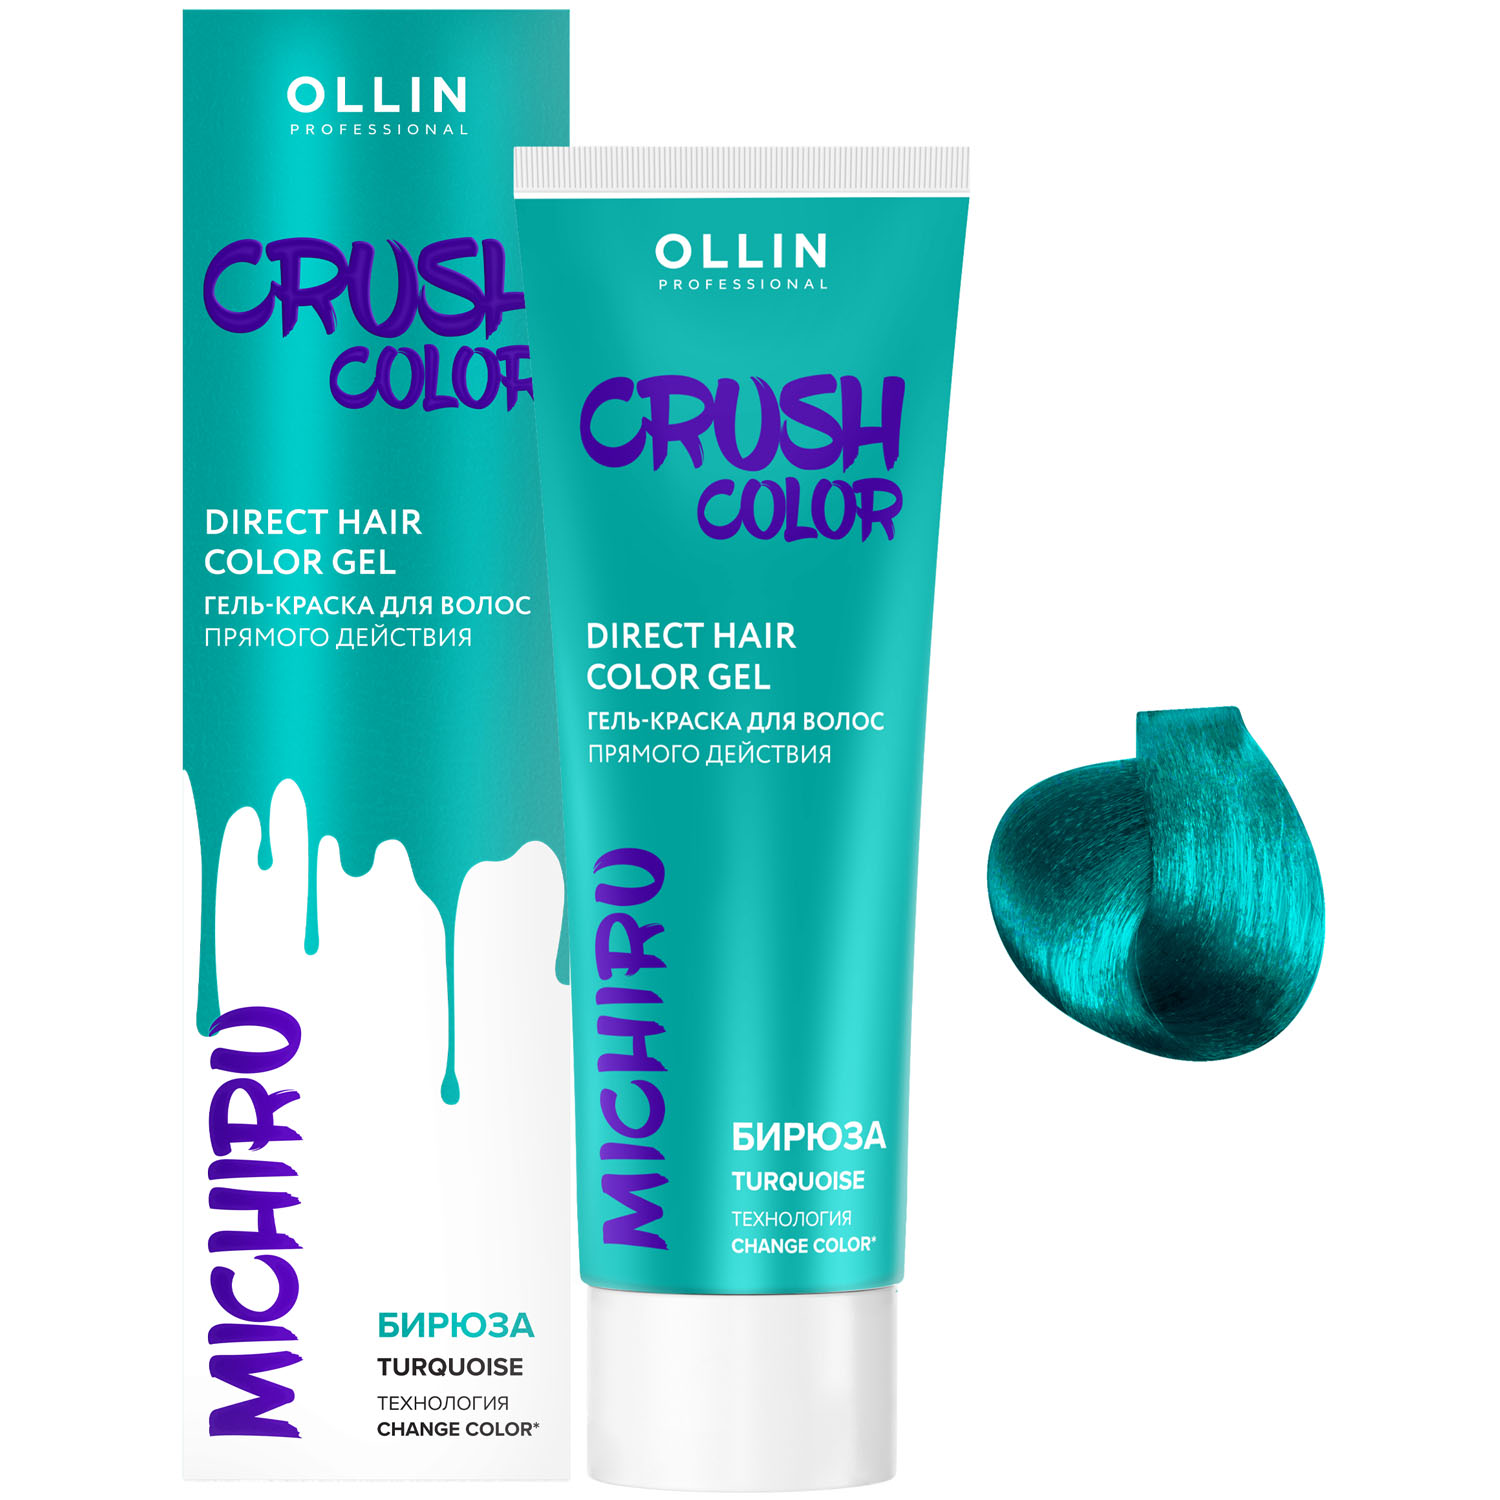 Ollin Professional Экстраяркая краска-гель прямого действия, 100 мл (Ollin Professional, Crush Color)